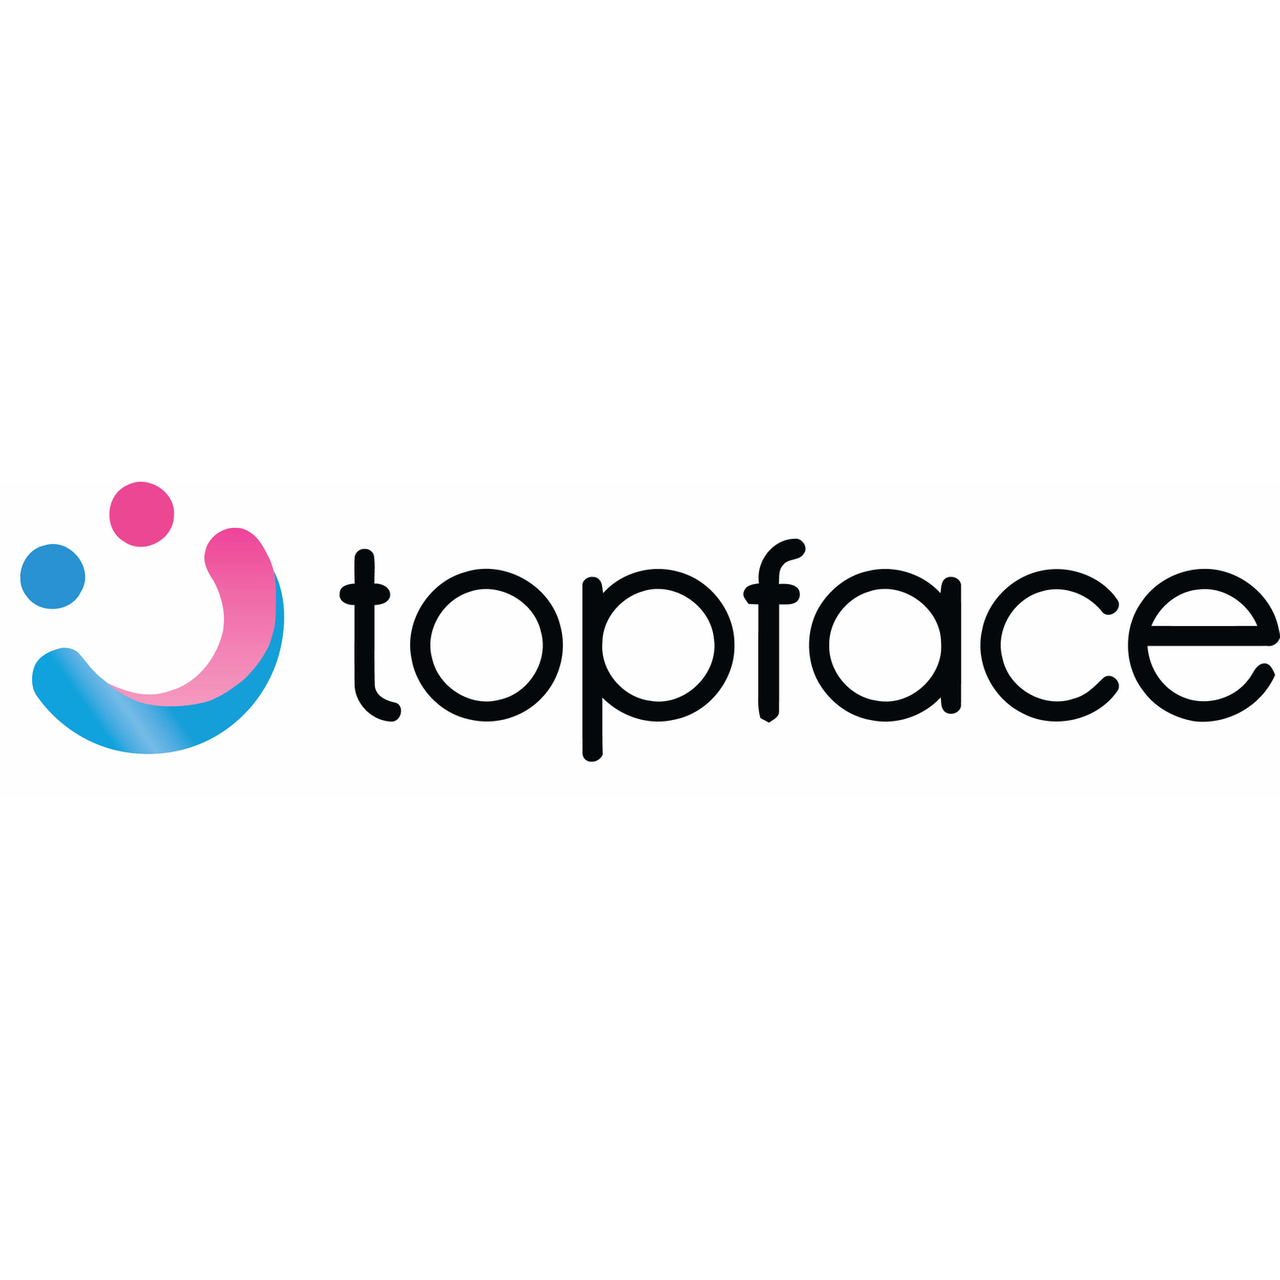 topface-logo.png.